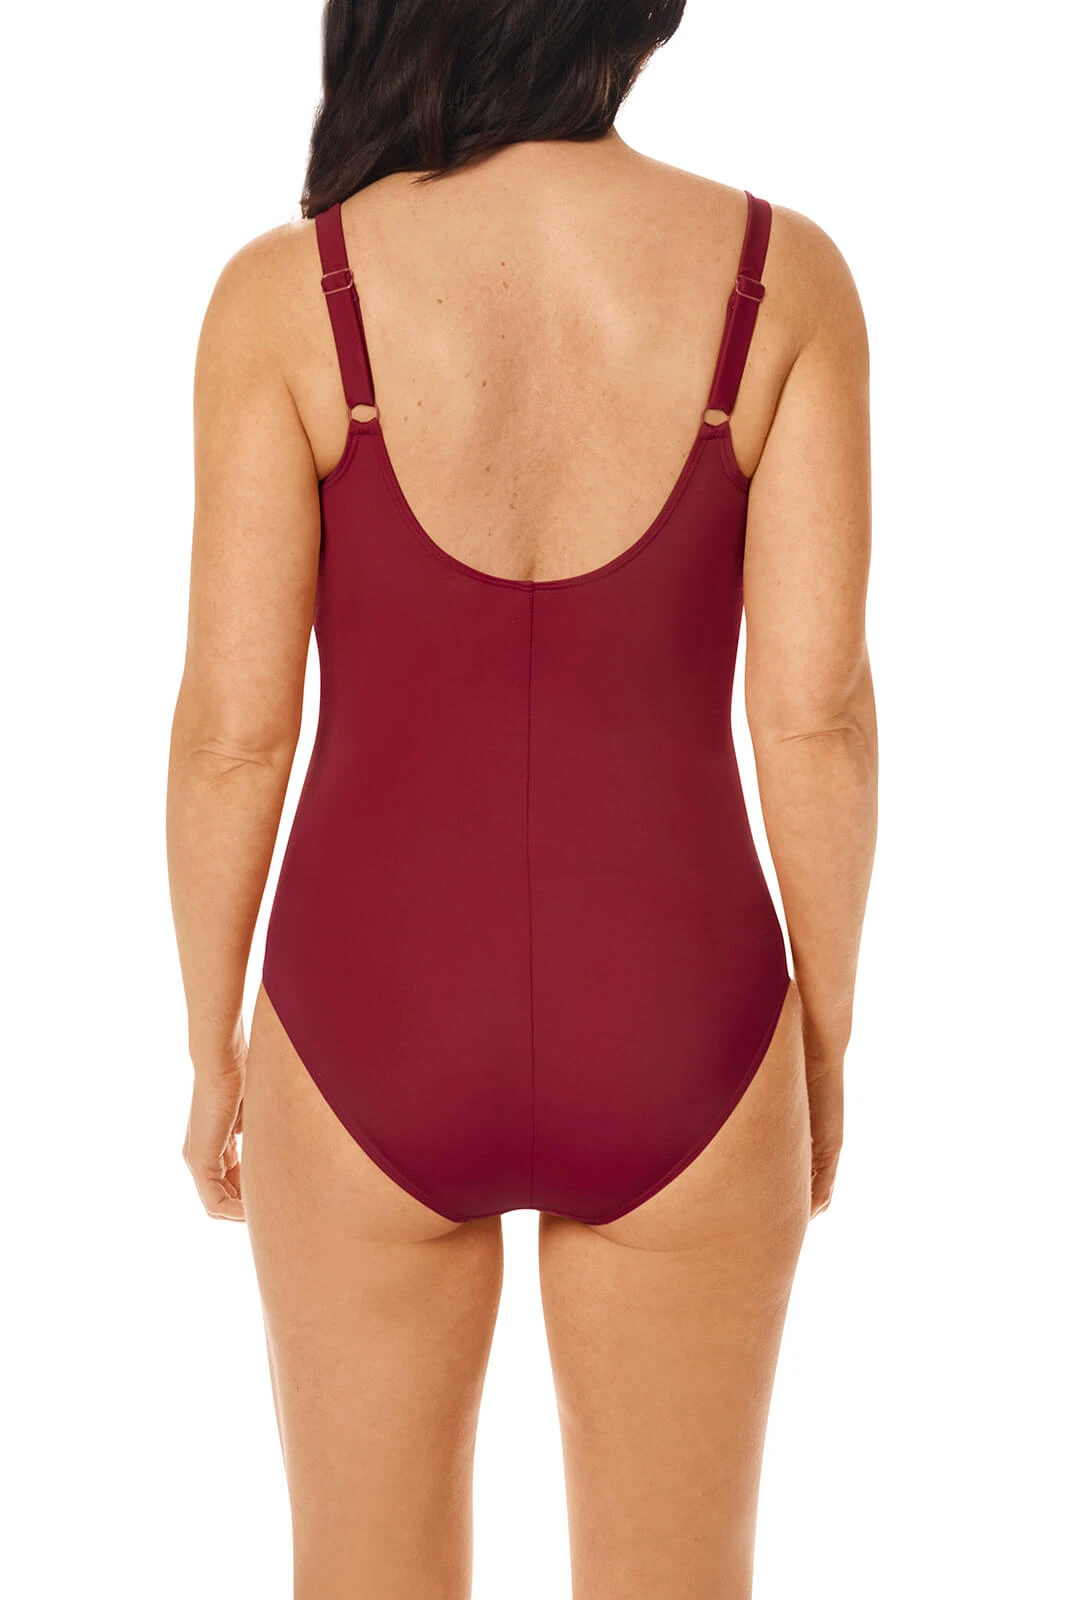 One Piece Ark Swimwear Cross Back Red - $58 (42% Off Retail) - From Mavery